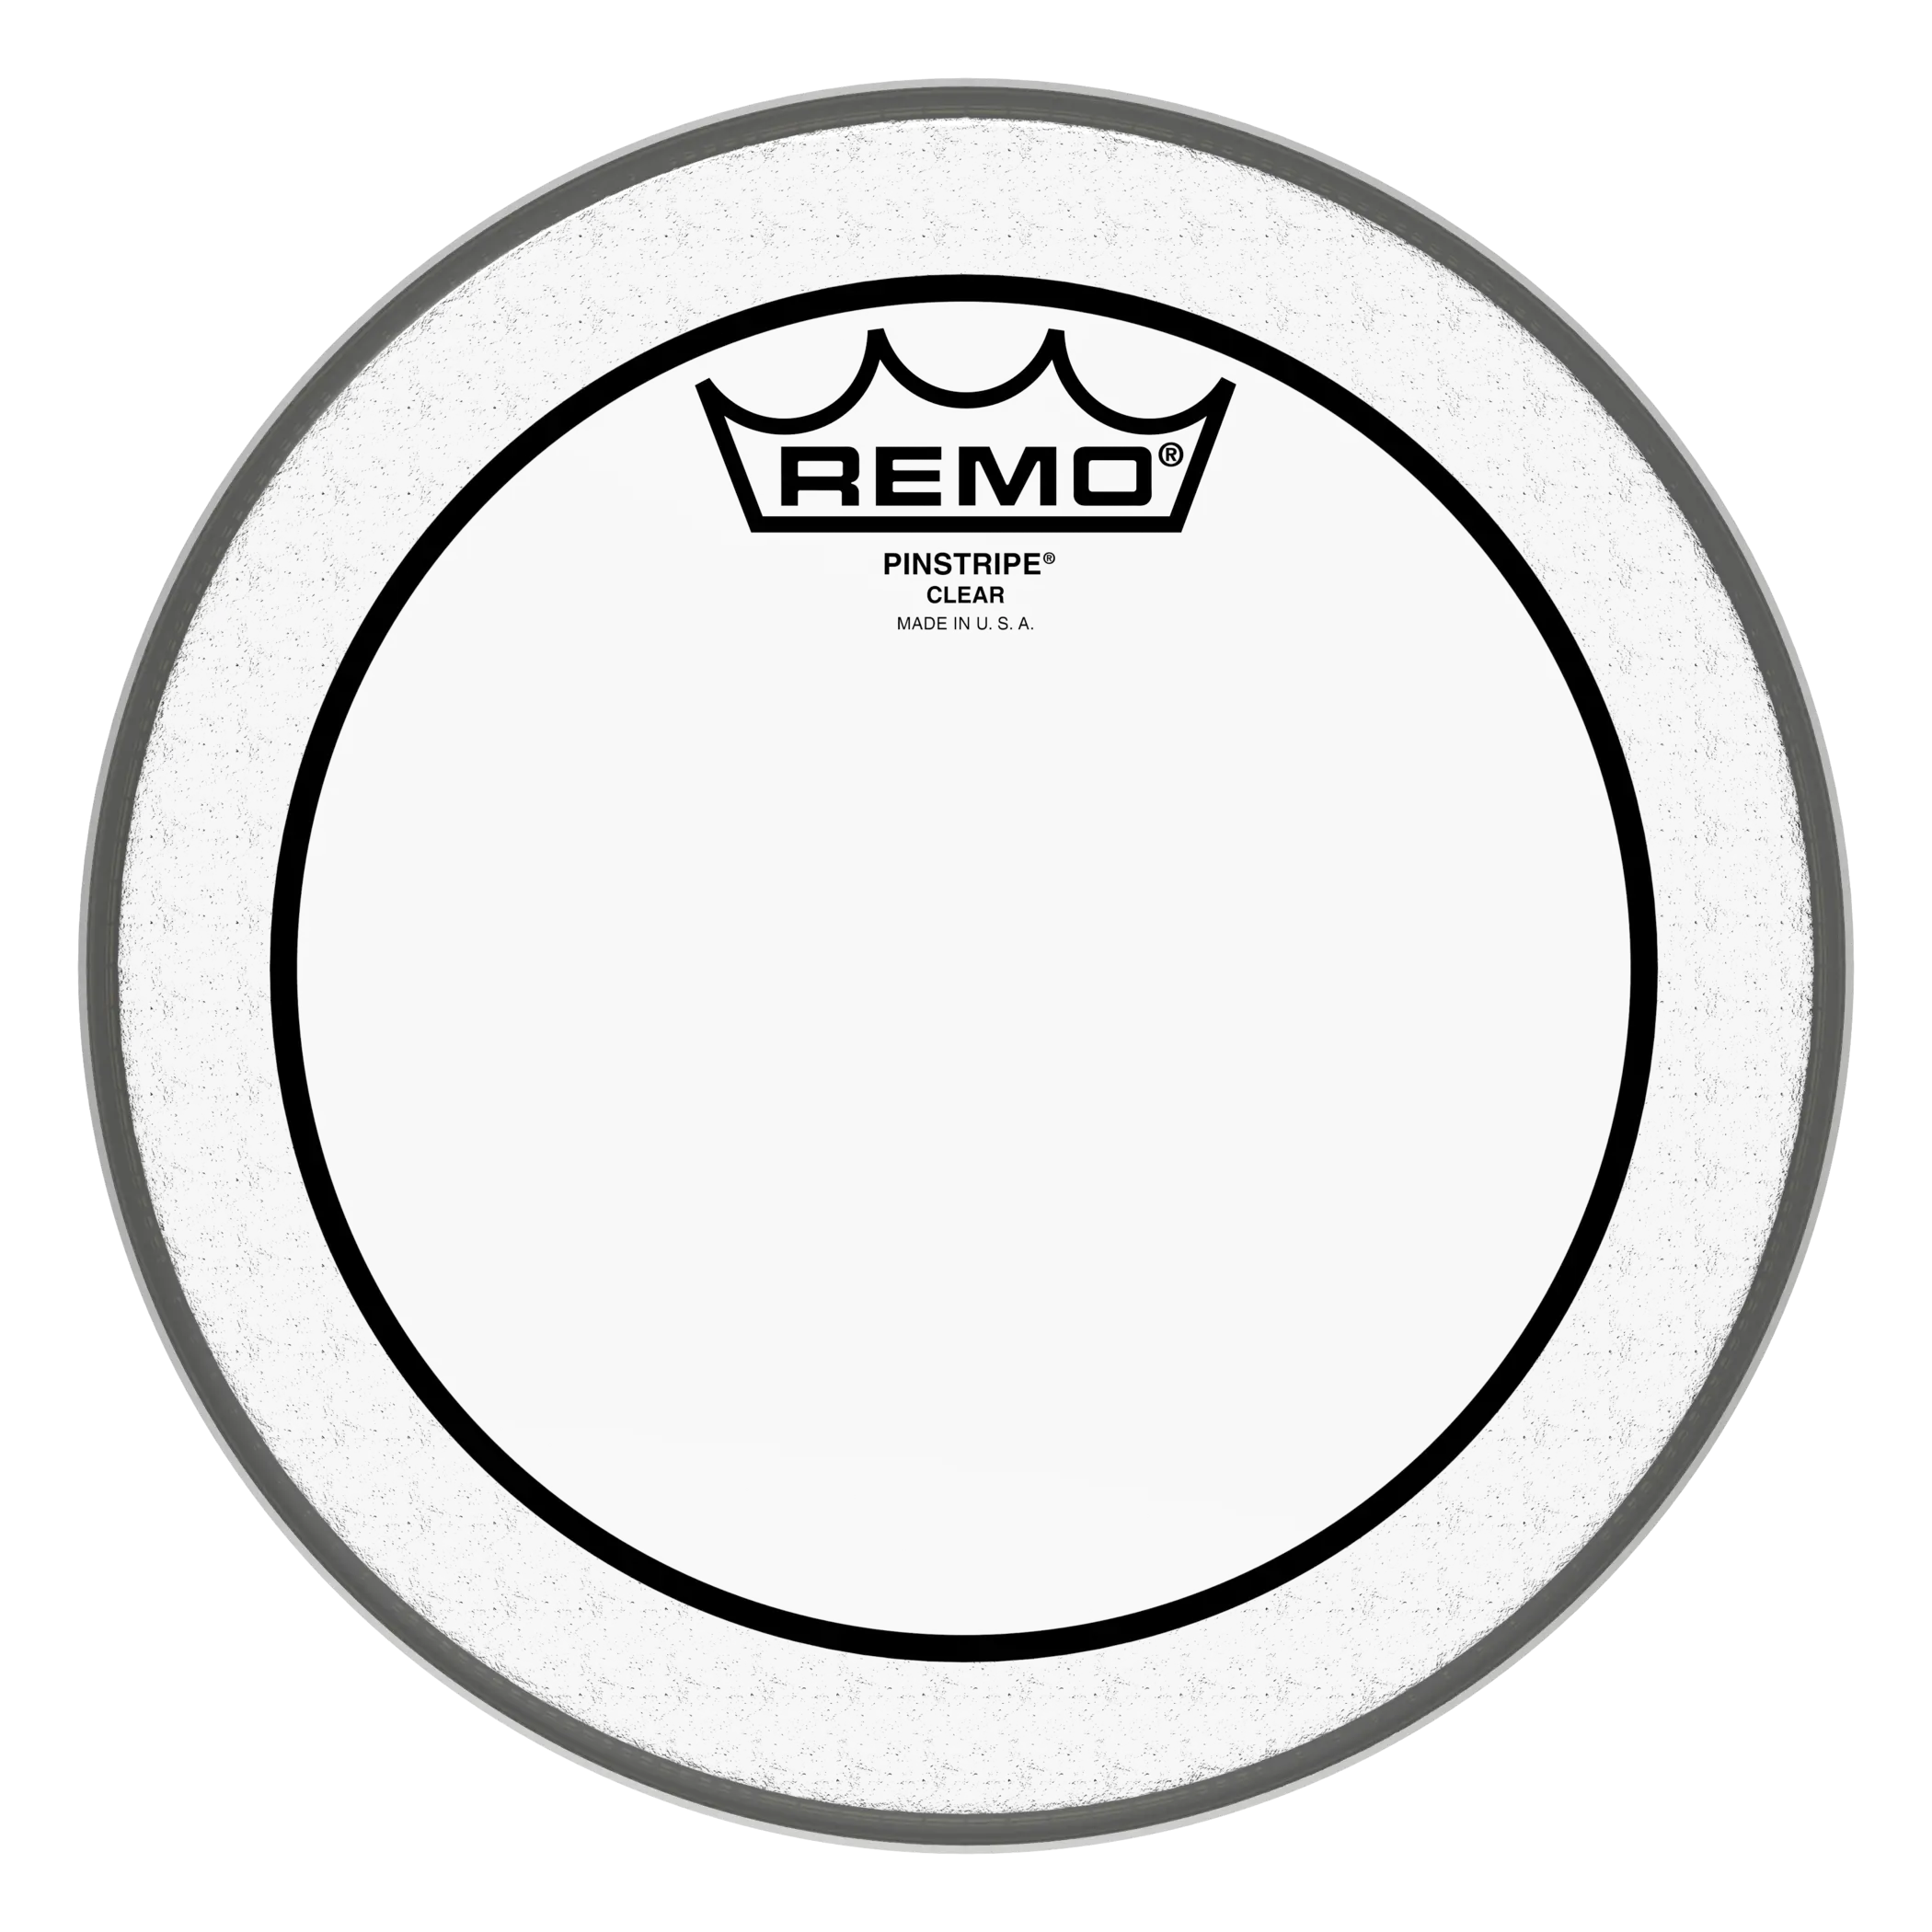 Remo Pinstripe Clear Drumhead - 8"